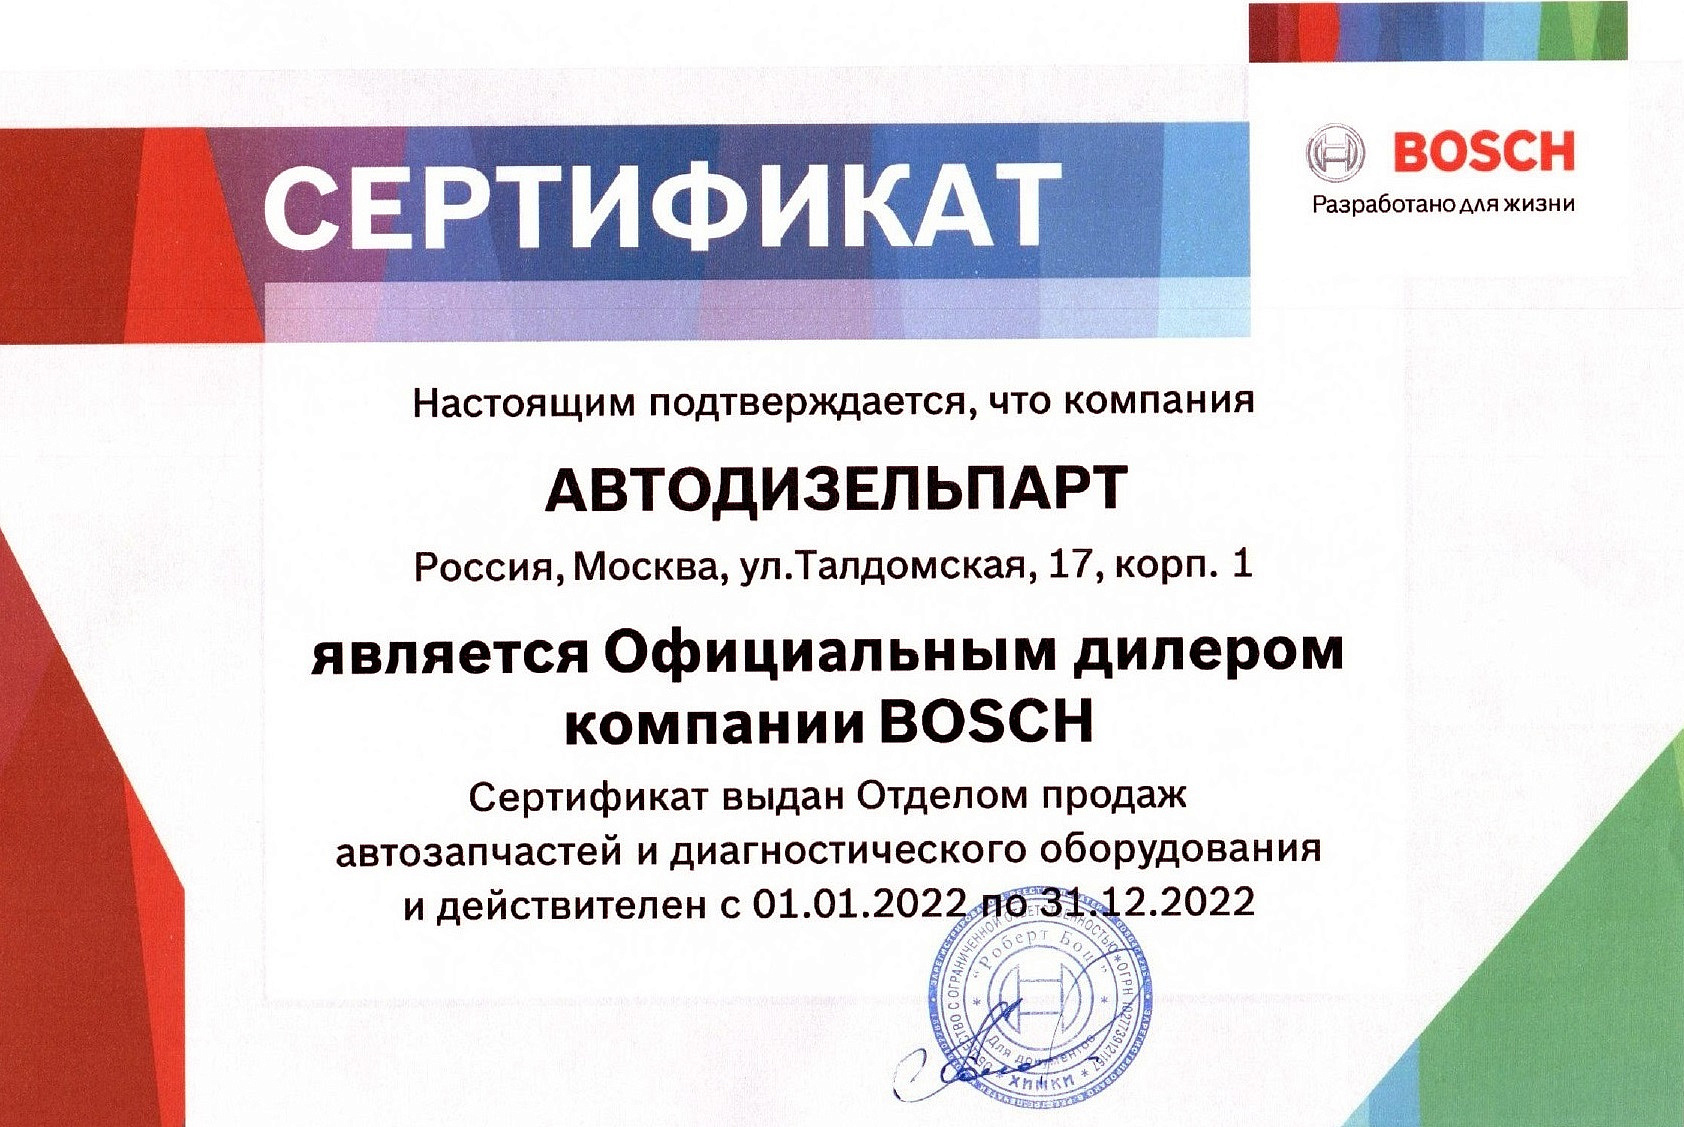 Сертификат Bosch 2022